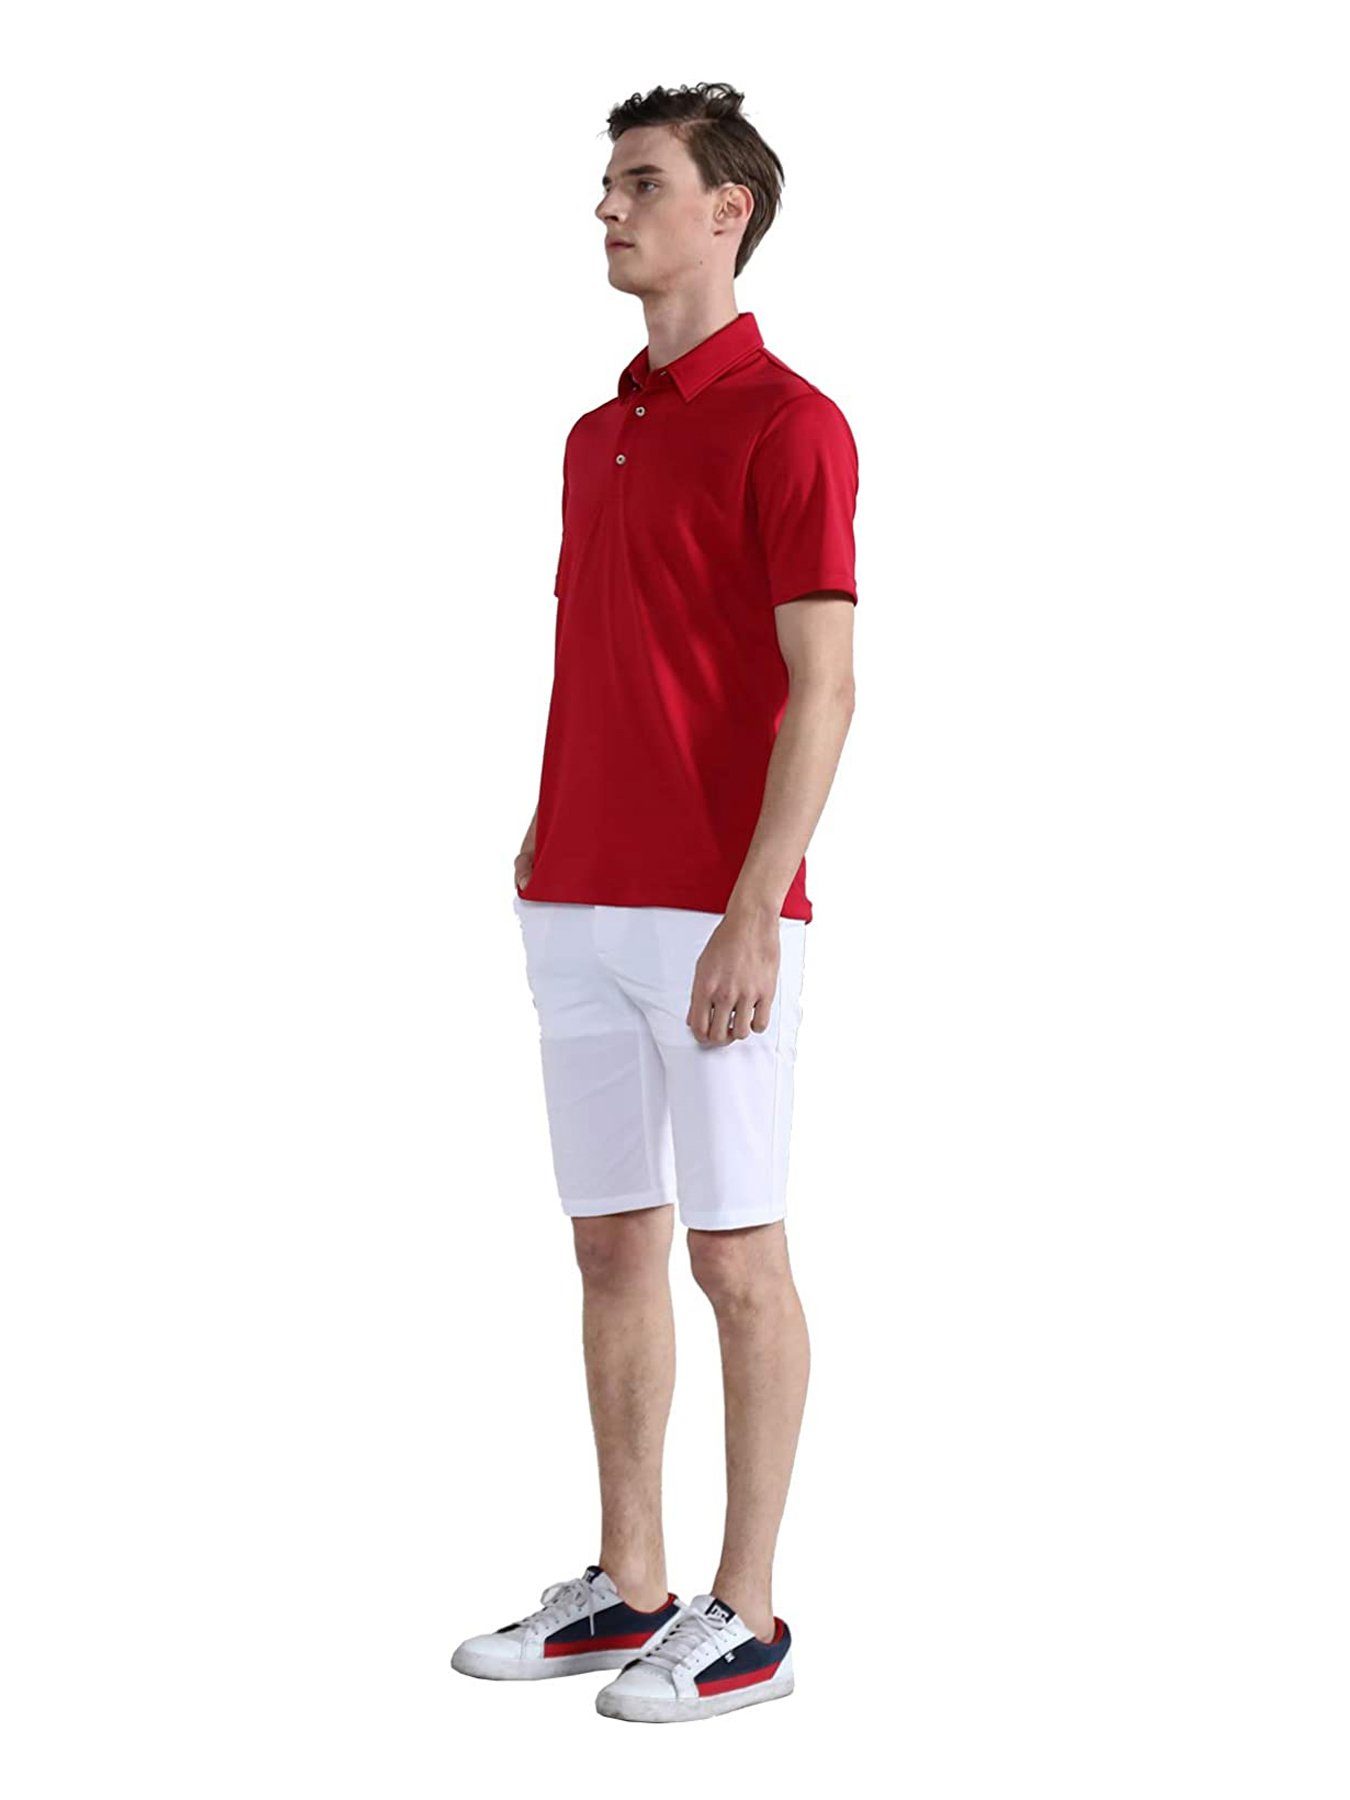 Rot DEBAIJIA DEBAIJIA Golf Fit Poloshirt Kurzarm Herren Poloshirt Leicht Gemütlich Standard